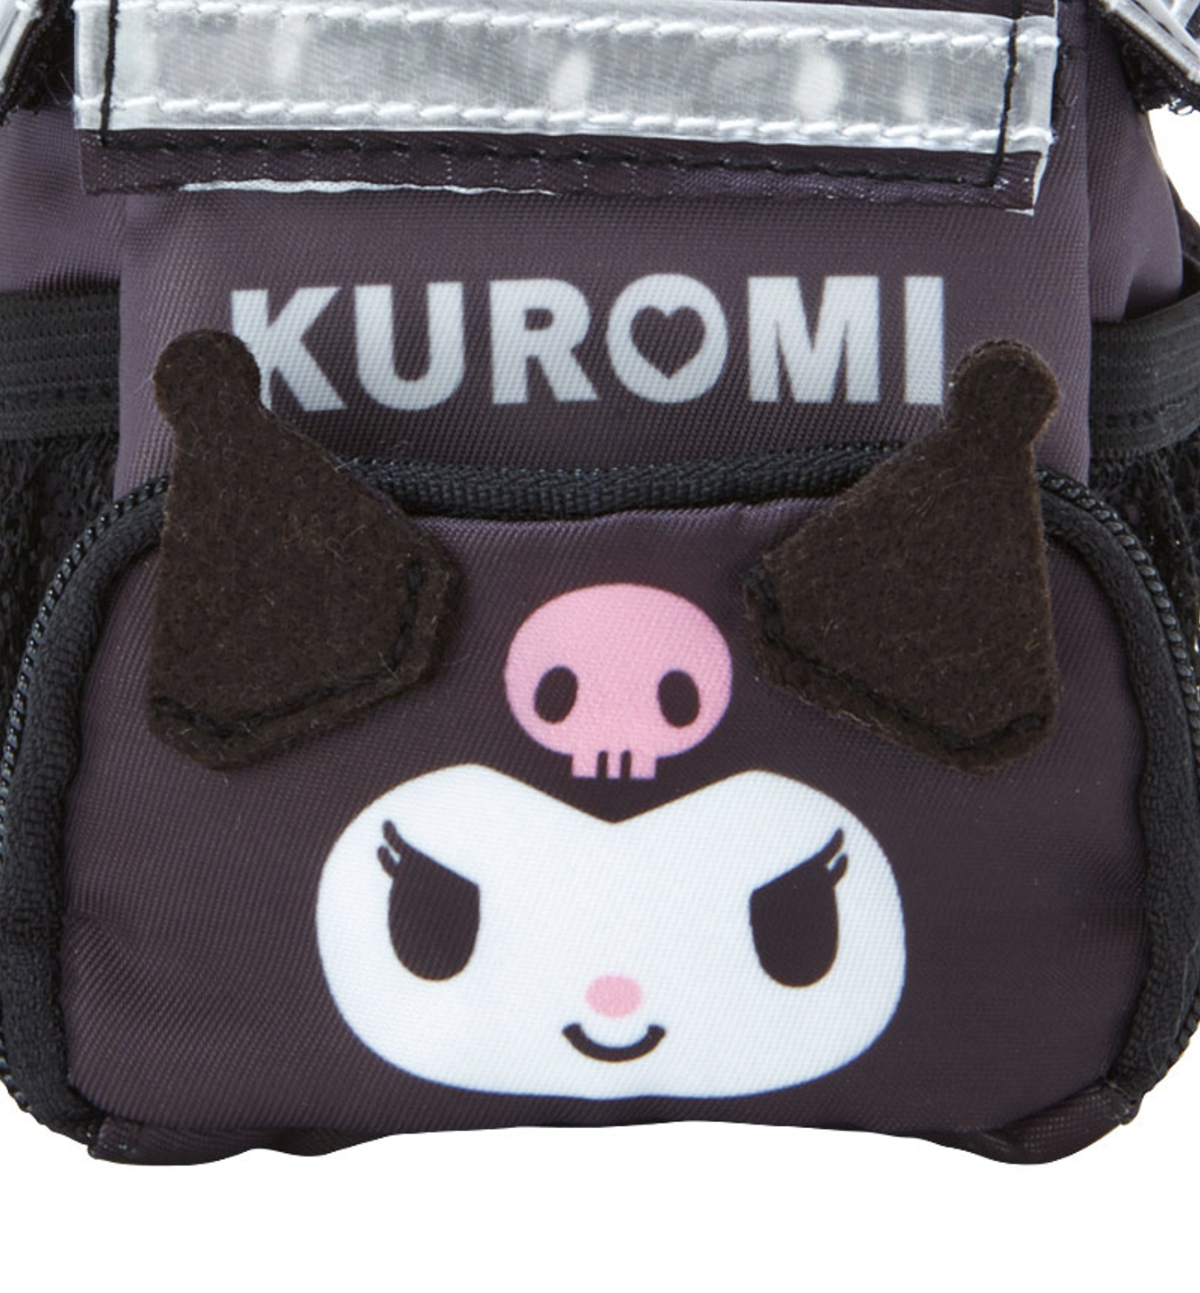 Clear Pencil Case/Organizer Bag with Zipper - Kuromi (Fruits)